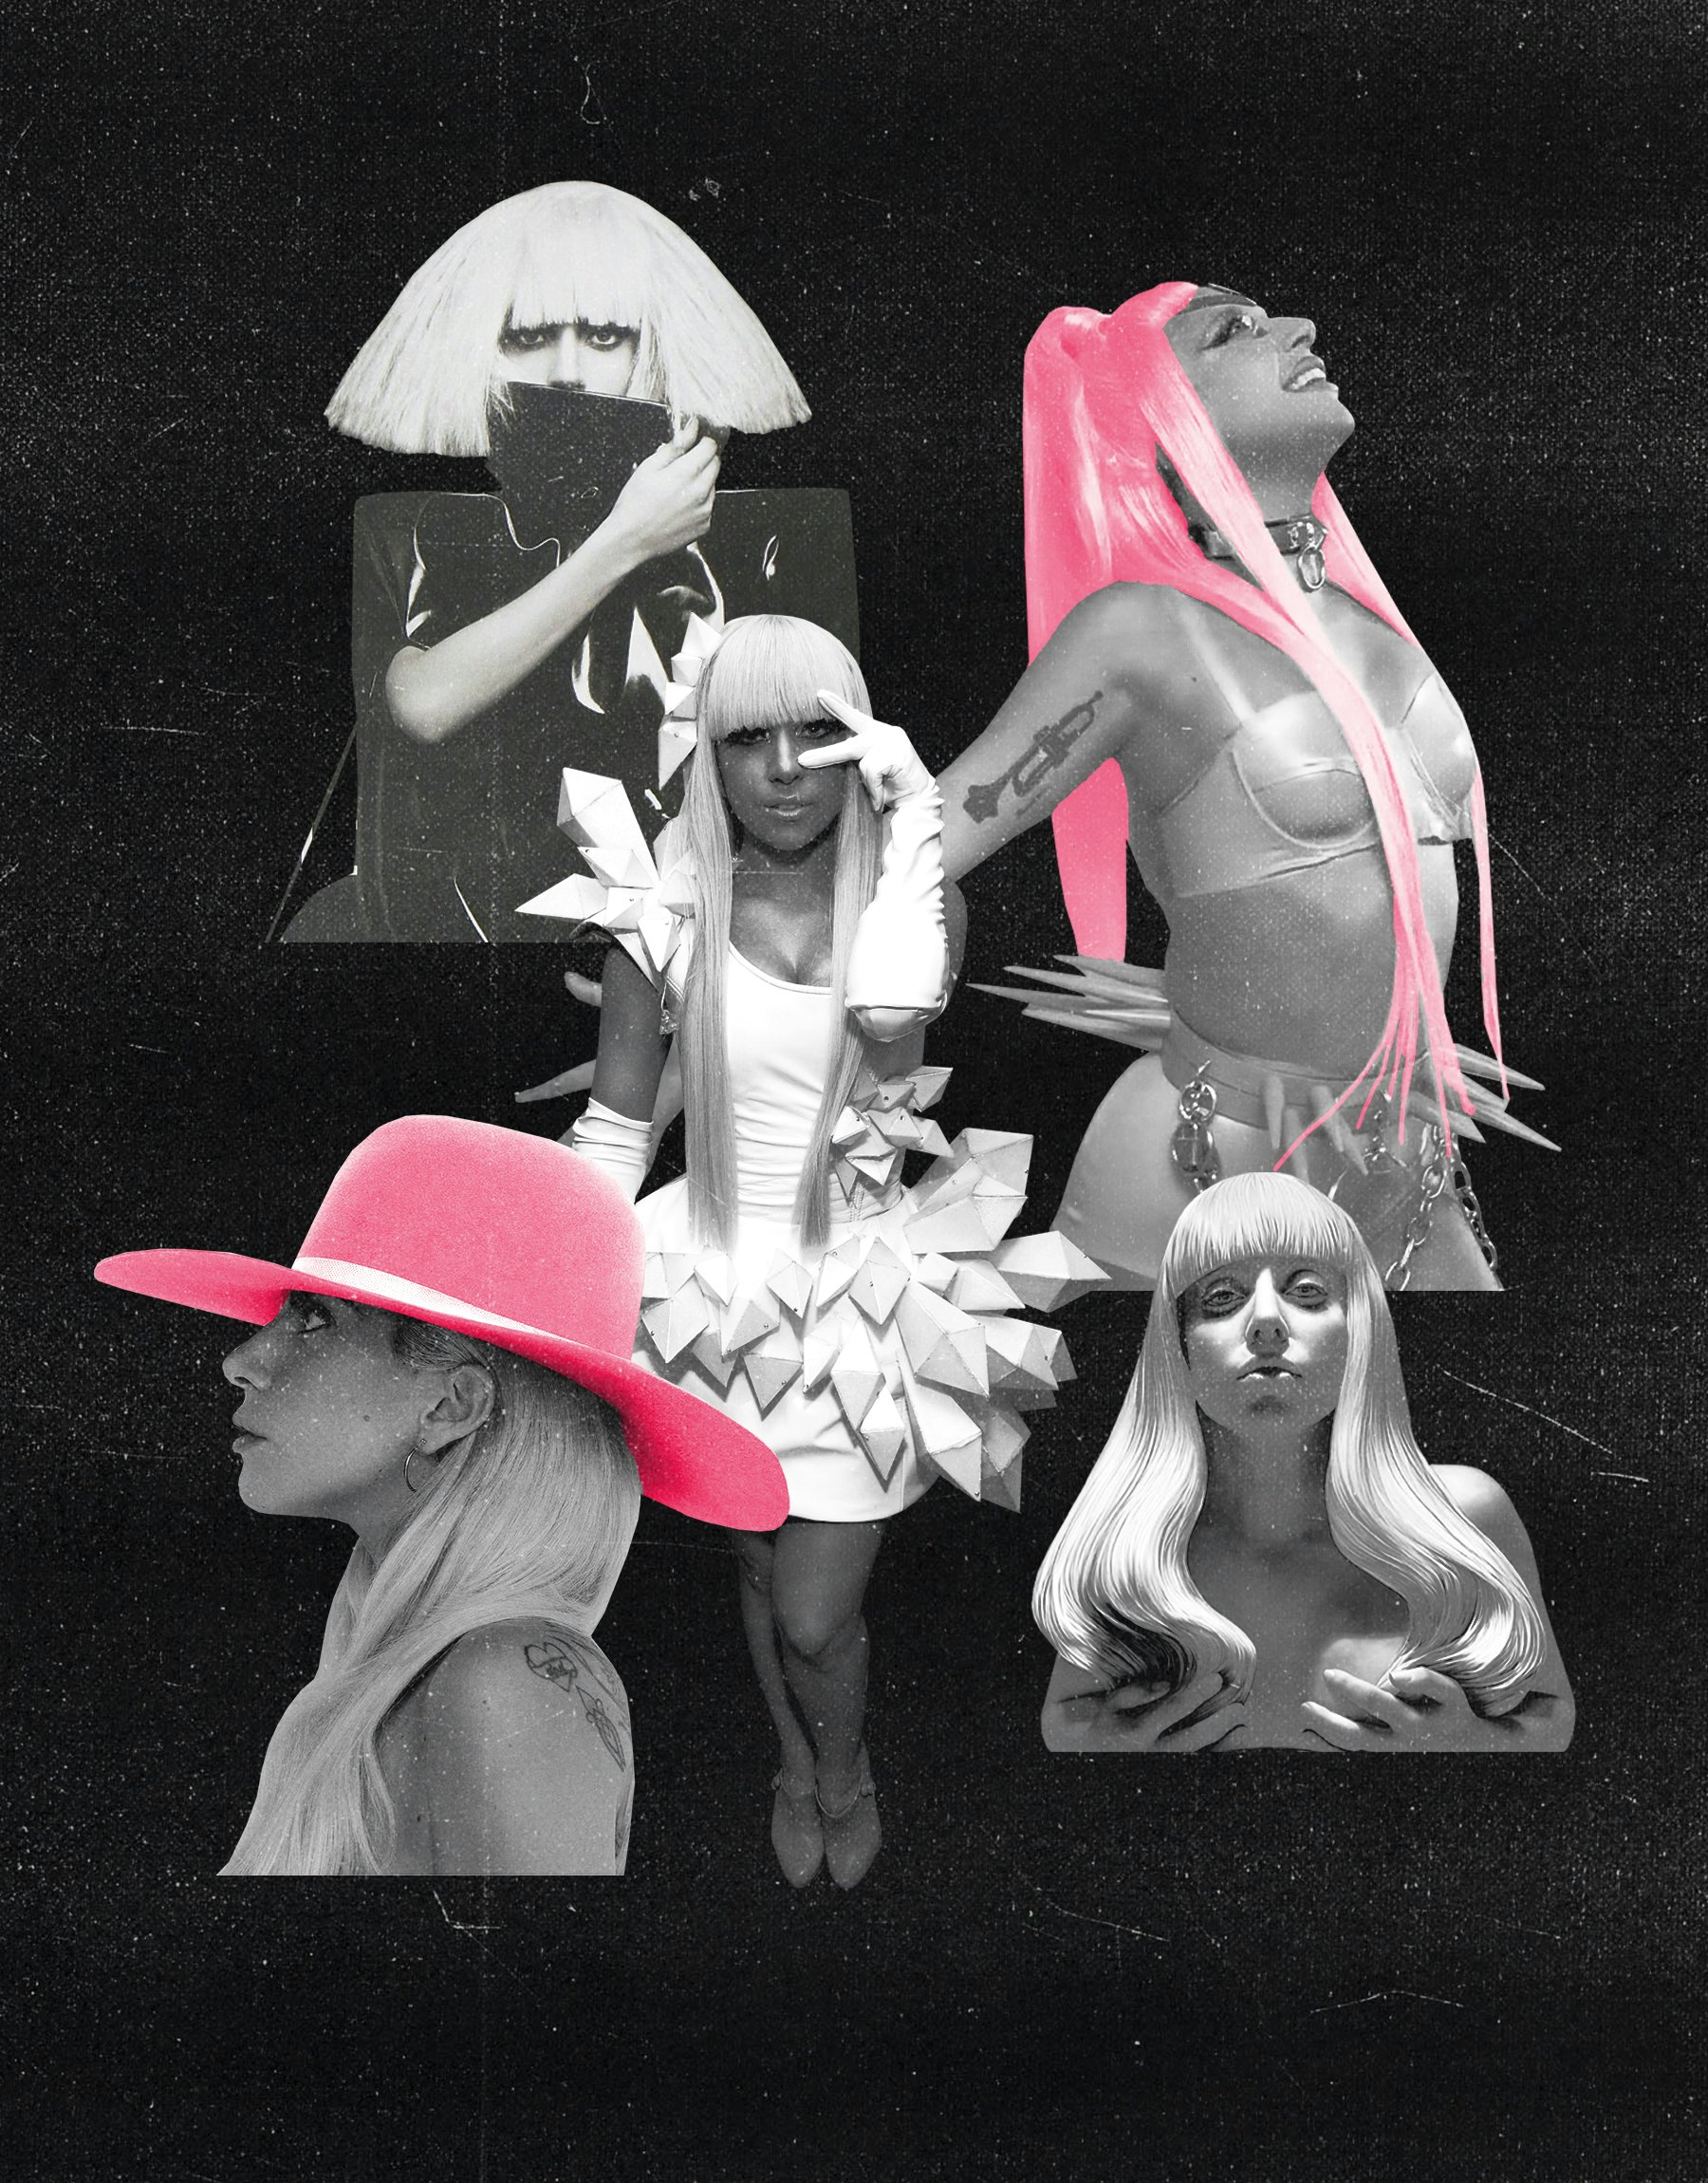 Megarate Gagas Discography Entertainment Talk Gaga Daily